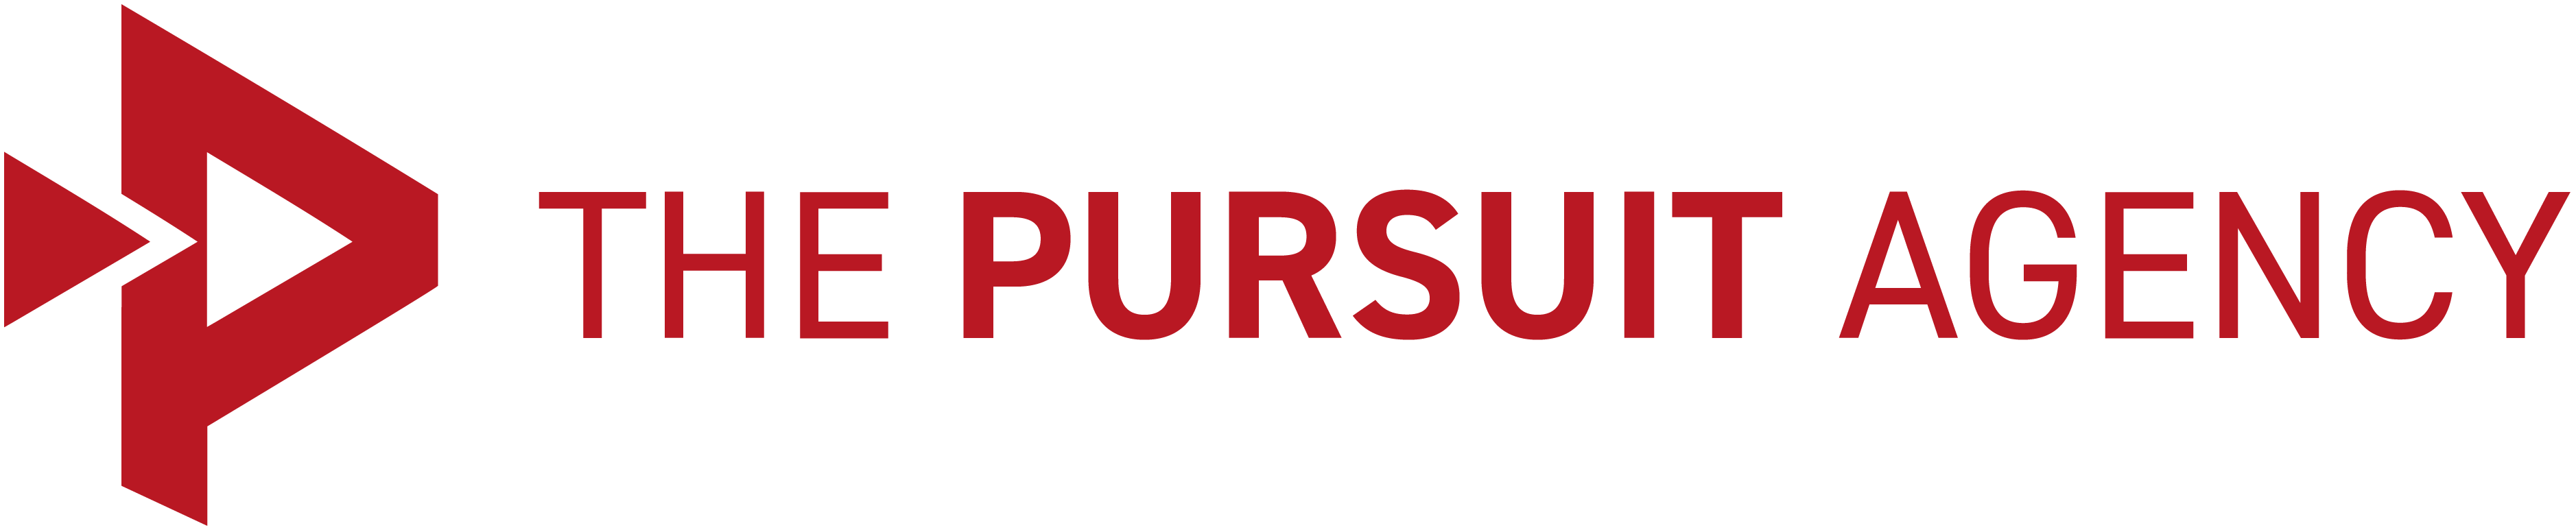 The Pursuit Agency 